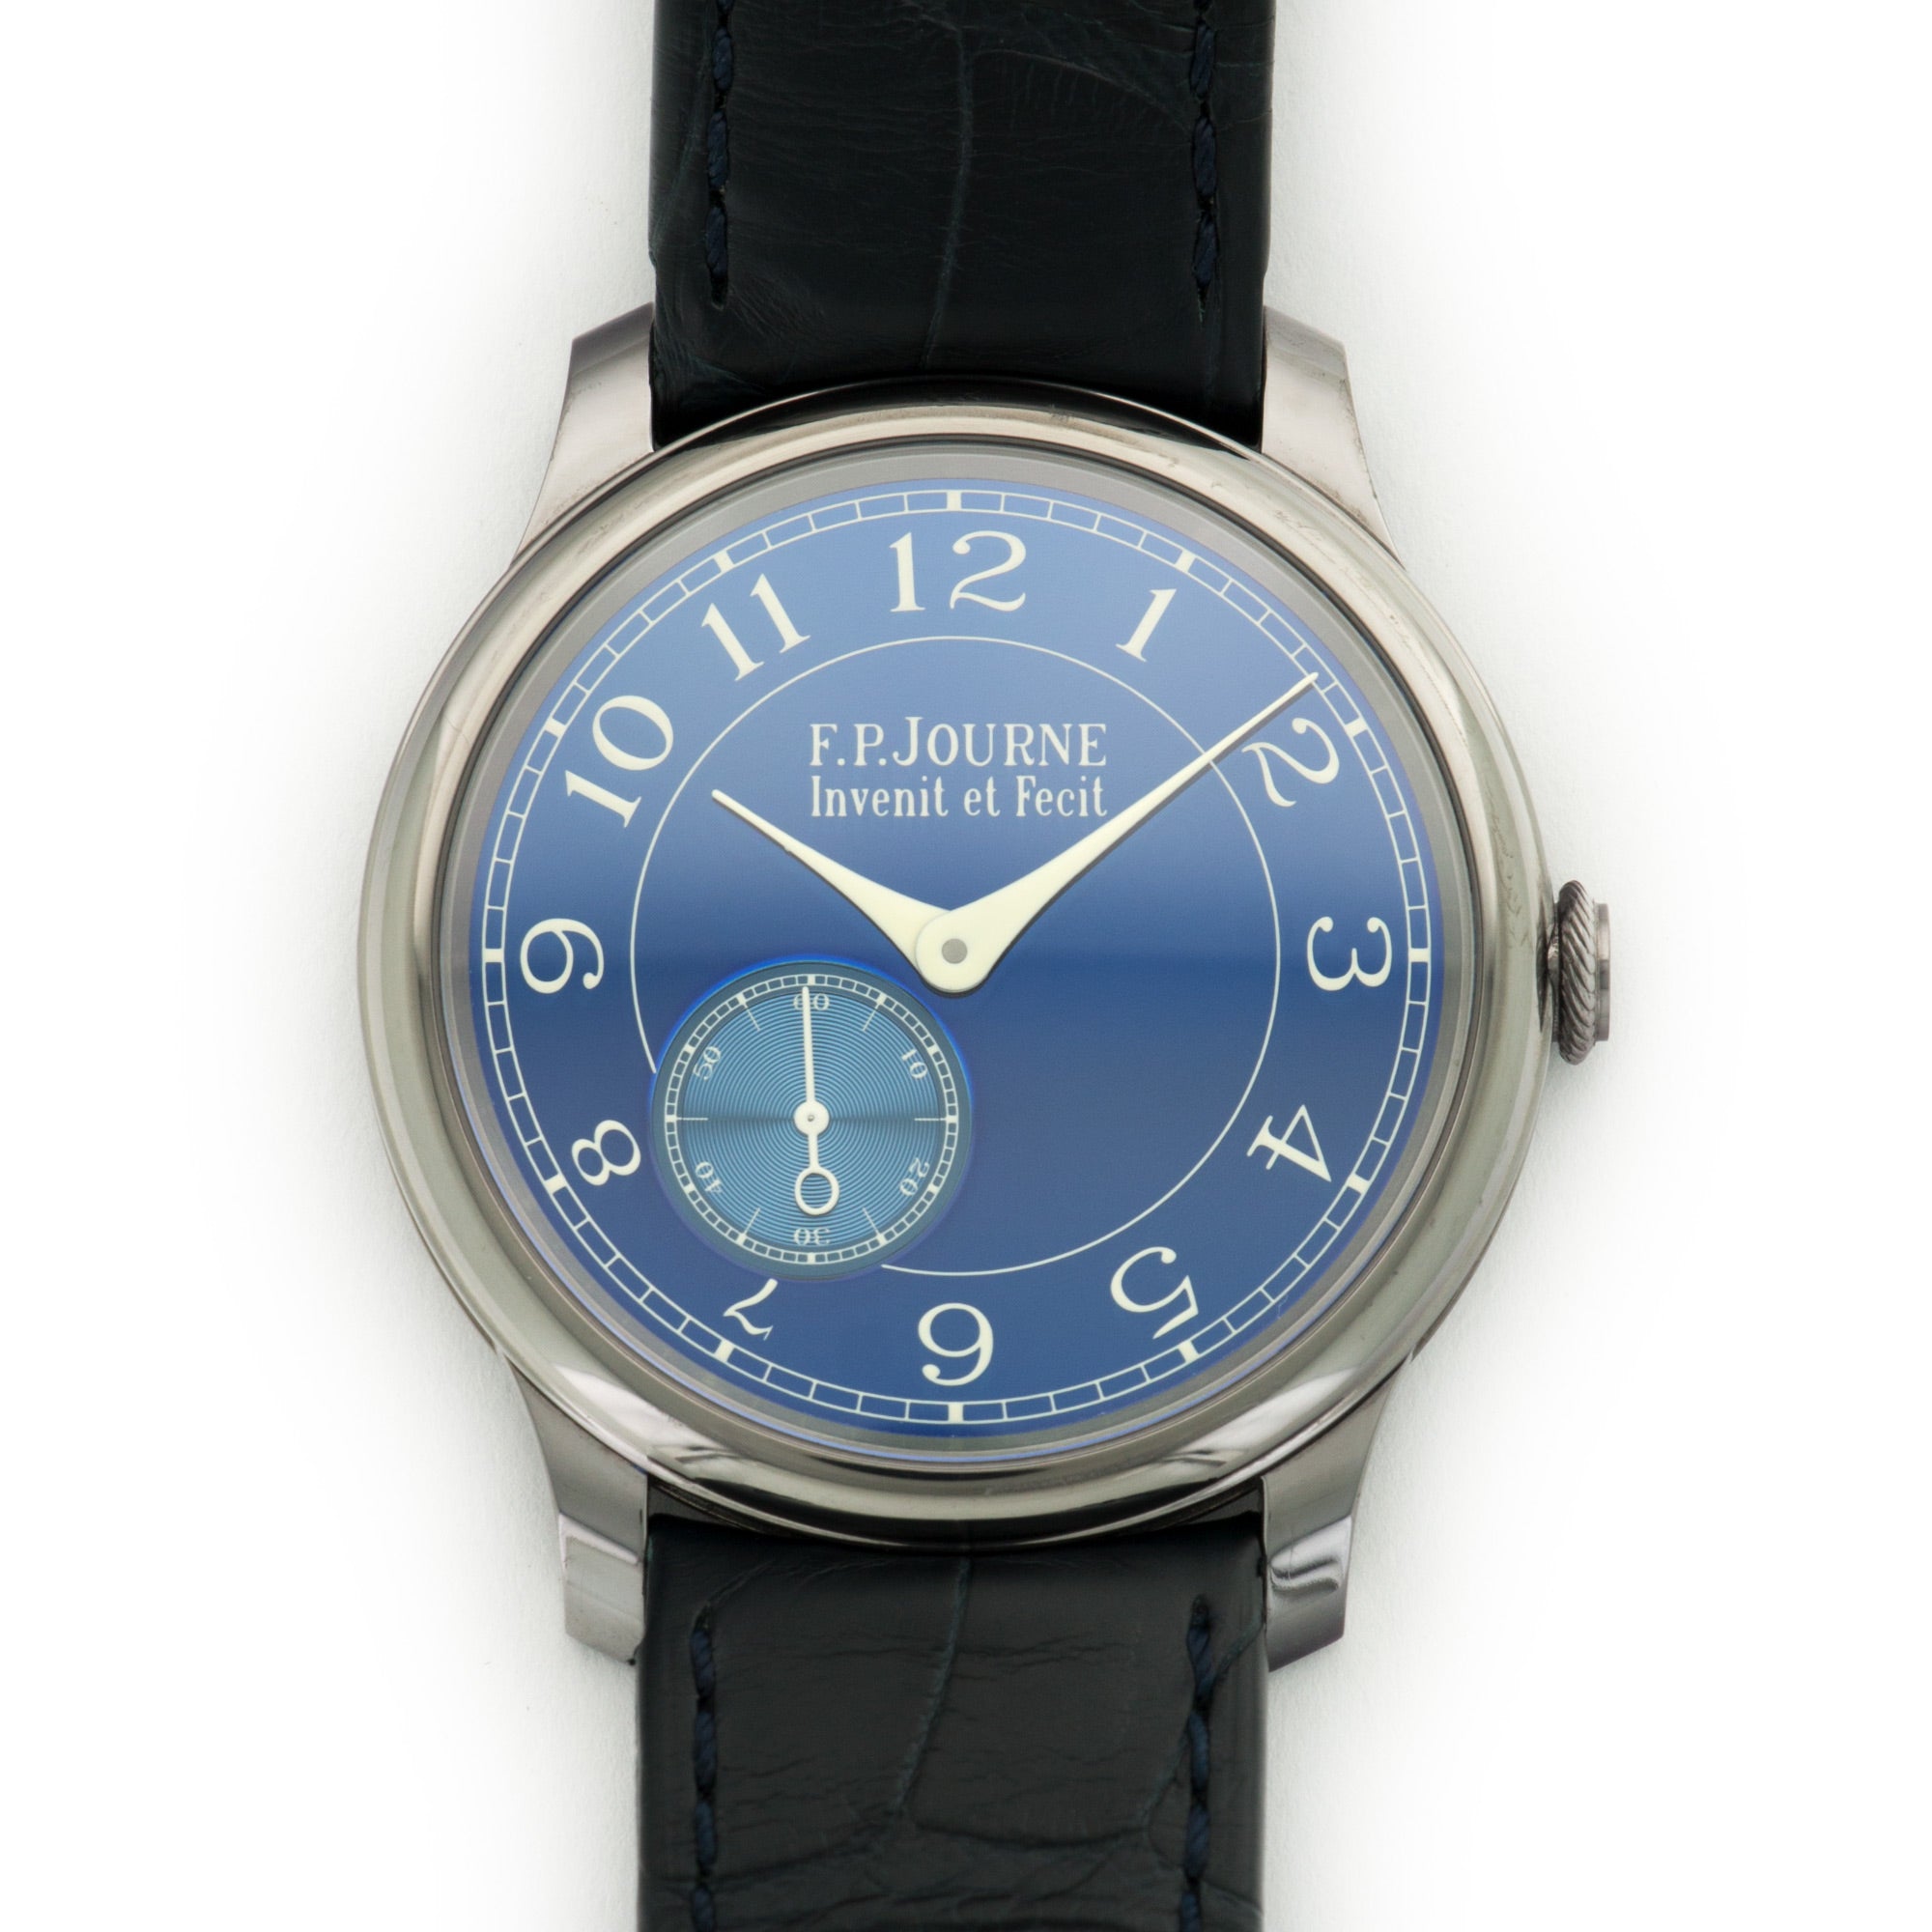 FP Journe - F.P Journe Tantalum Chronometre Bleu Watch - The Keystone Watches